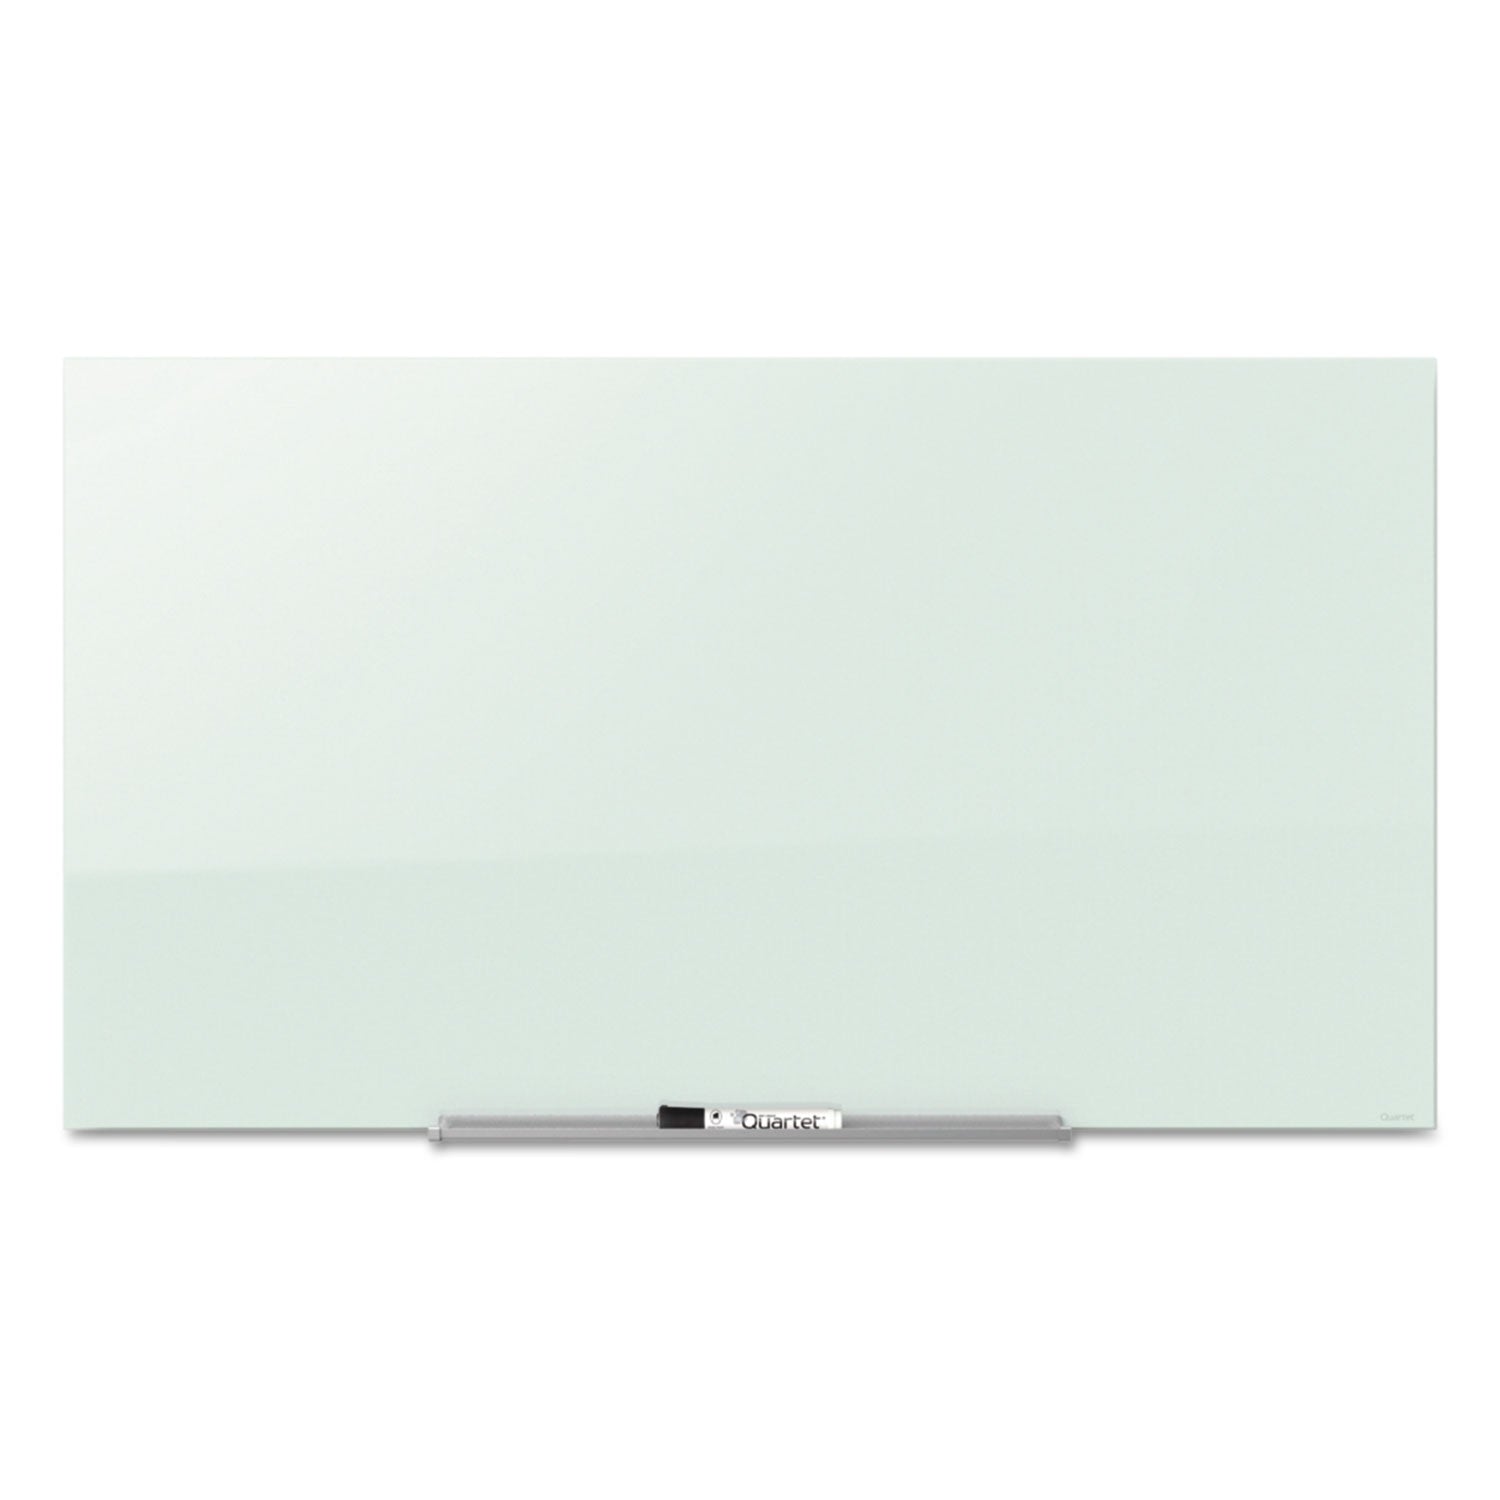 invisamount-magnetic-glass-marker-board-74-x-42-white-surface_qrtg7442imw - 1